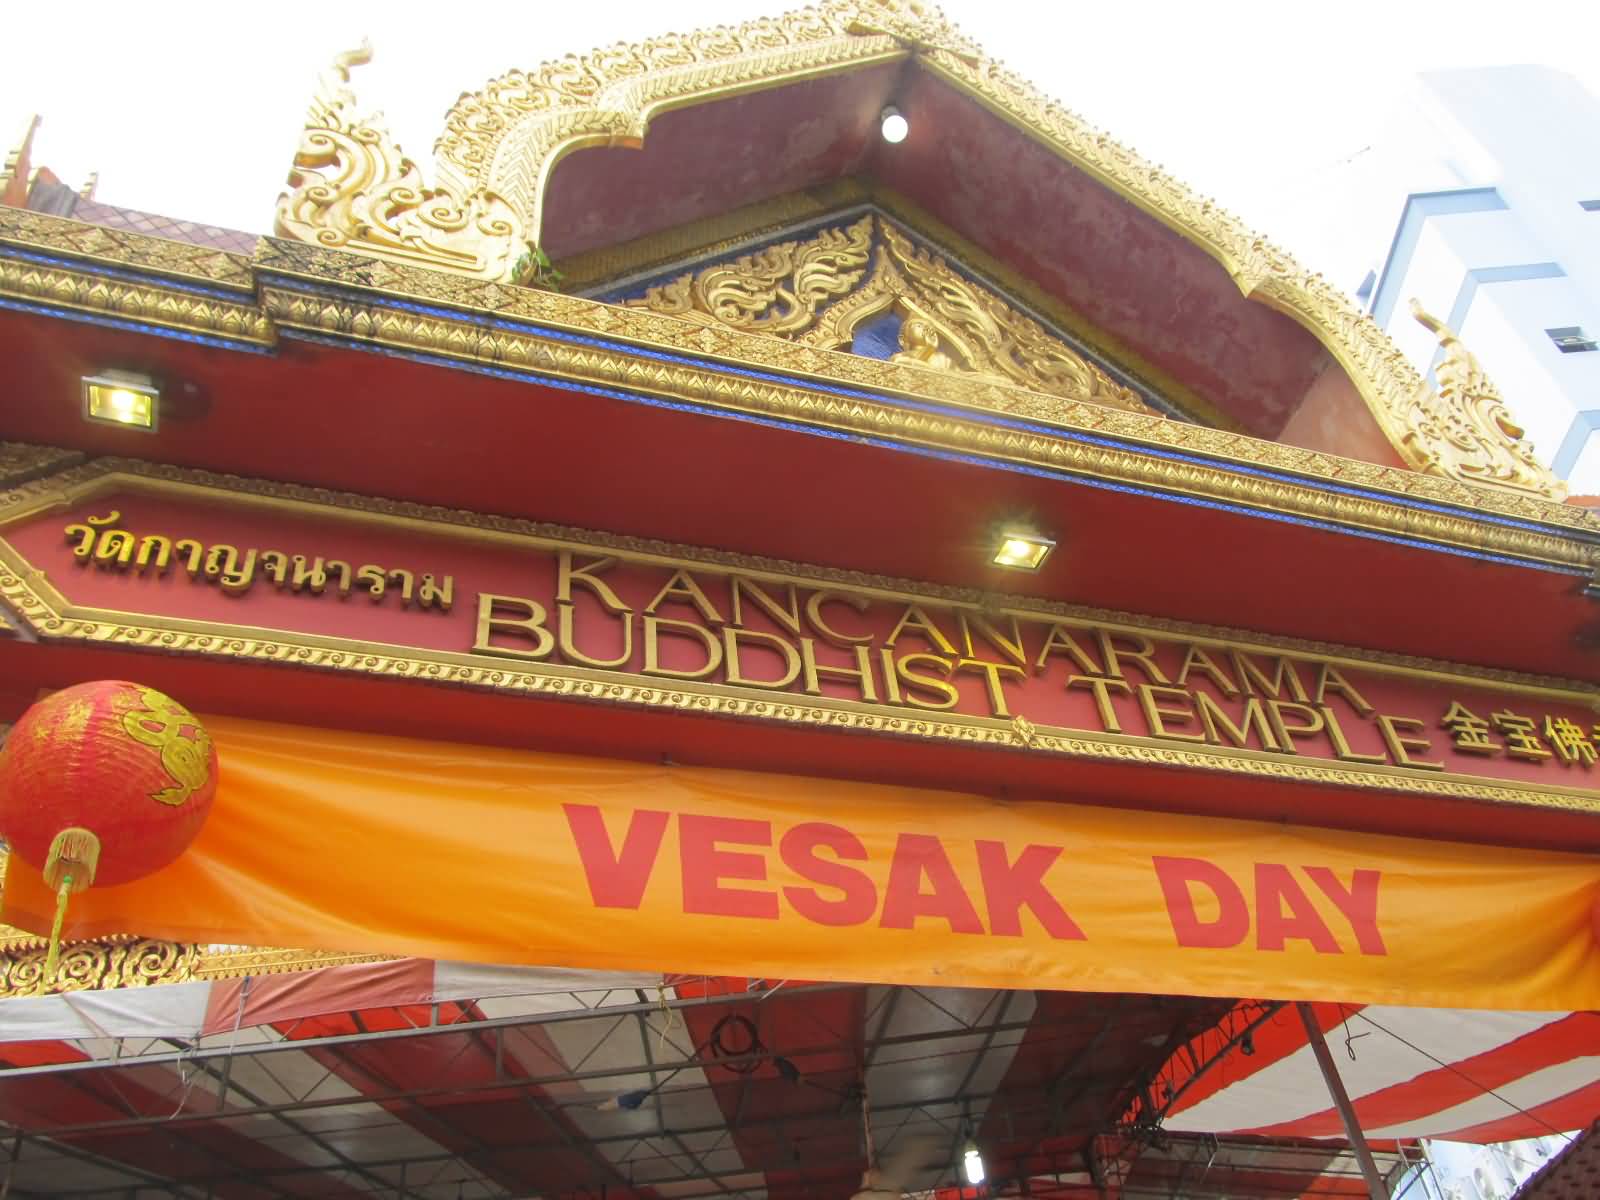 Vesak Day Celebration At Kancanarama Buddhist Temple